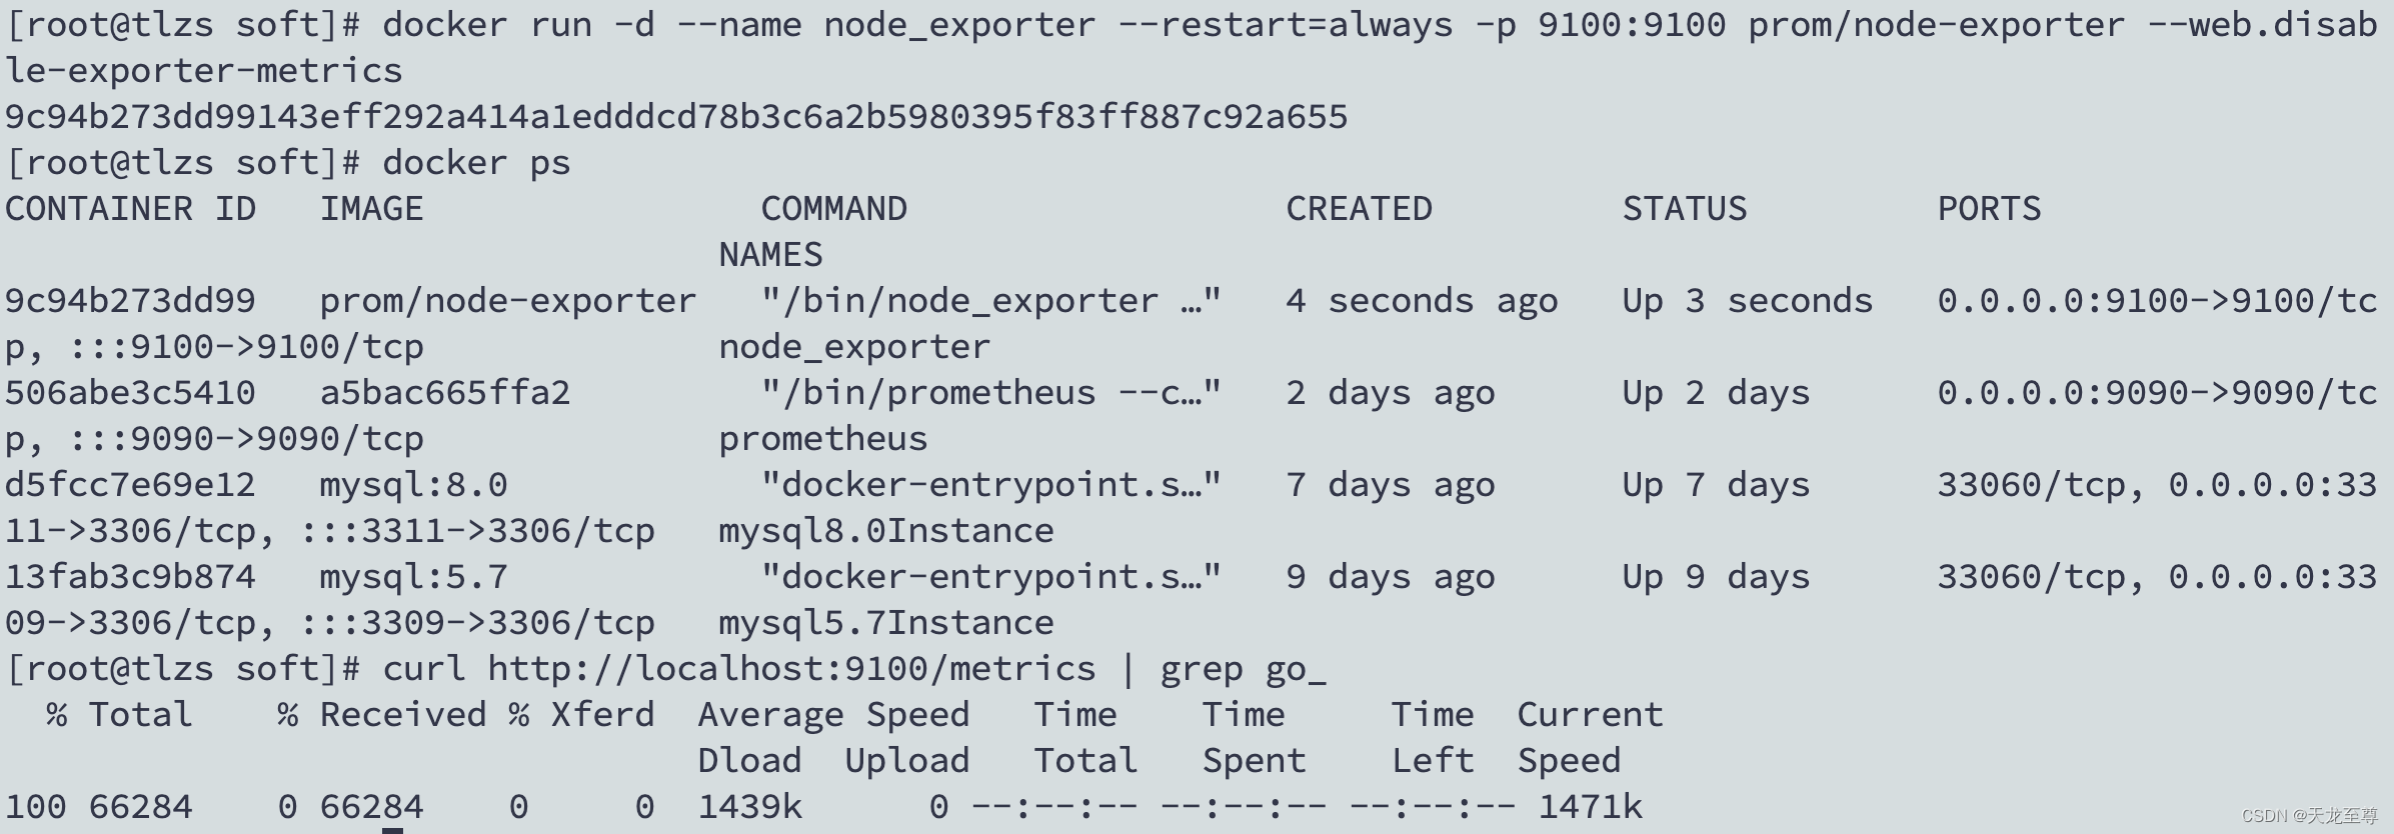 prometheus node exporter daemonset